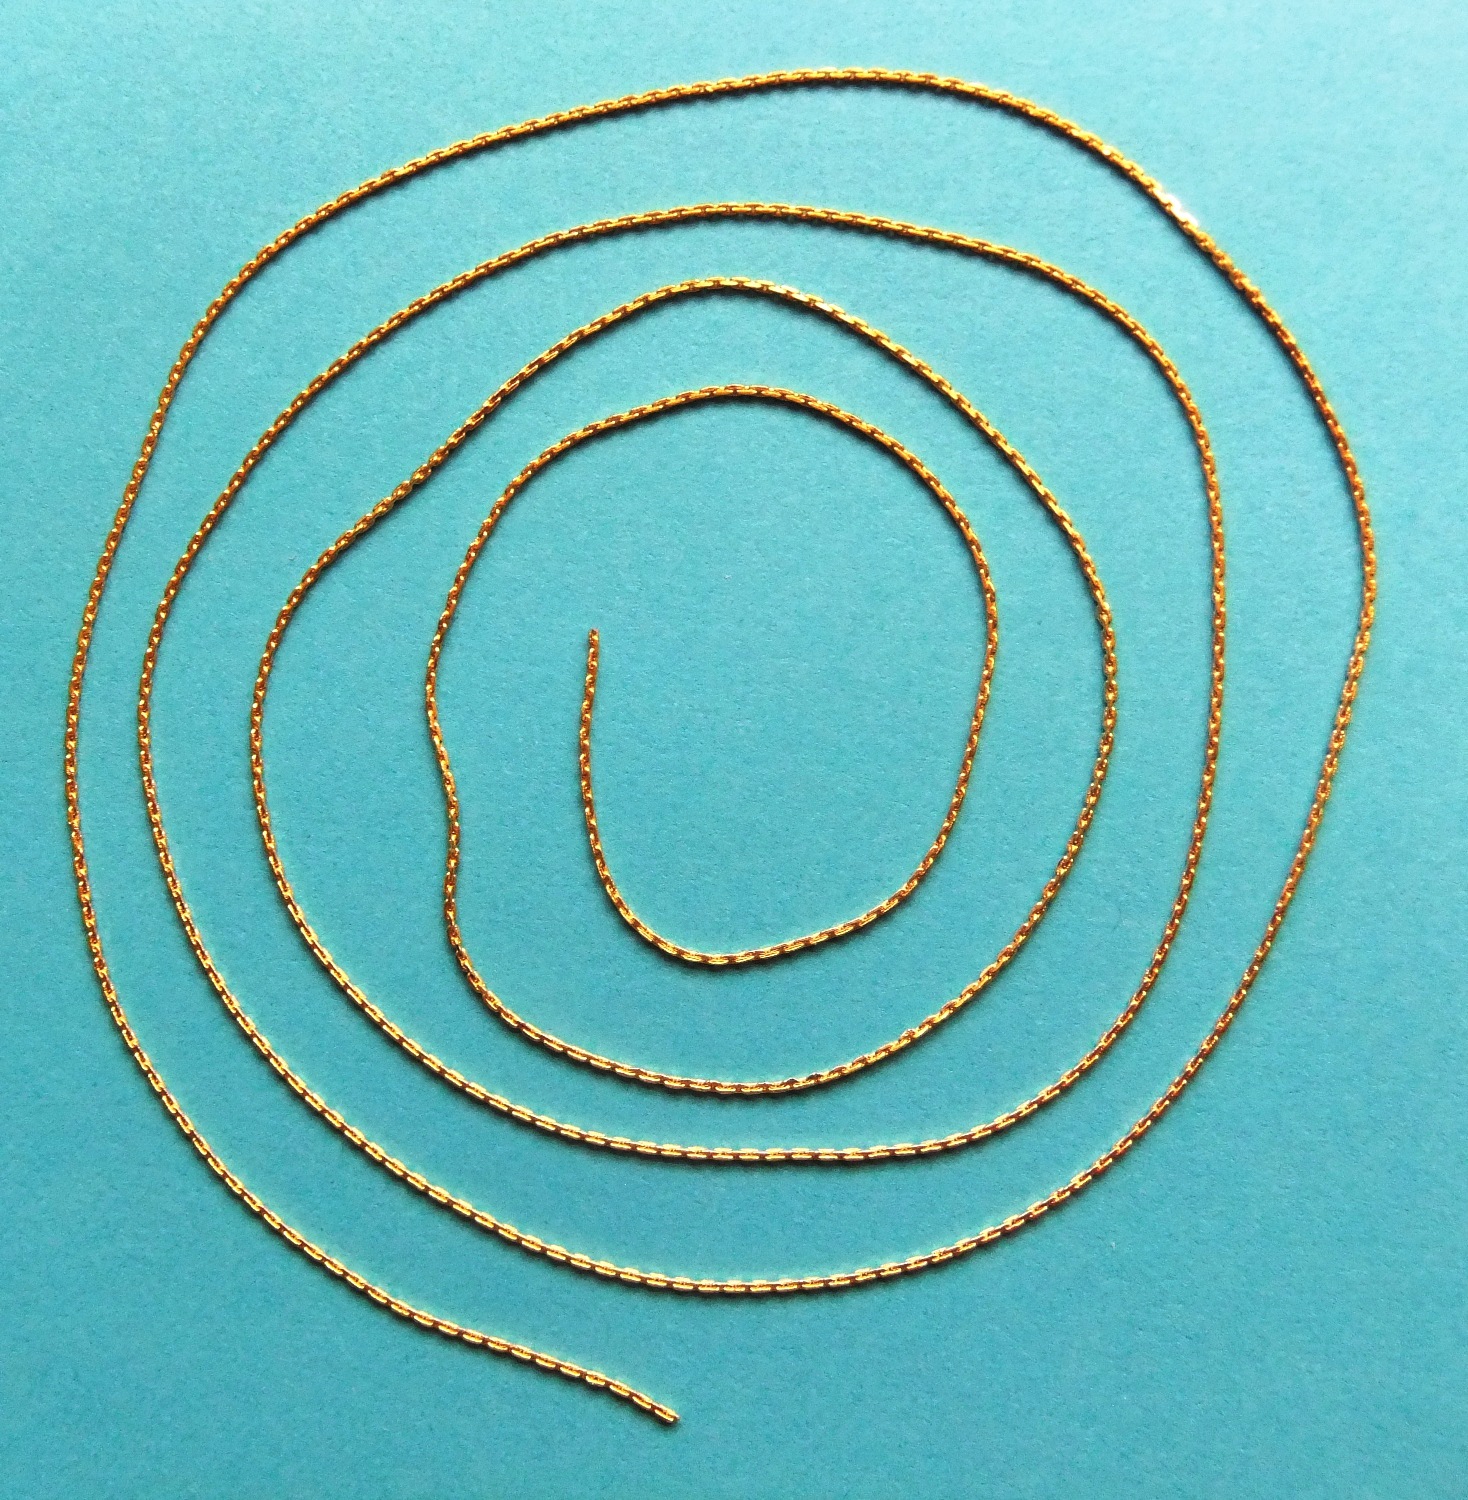 Very fine OVAL brass chain - 1 metre x 1mm links